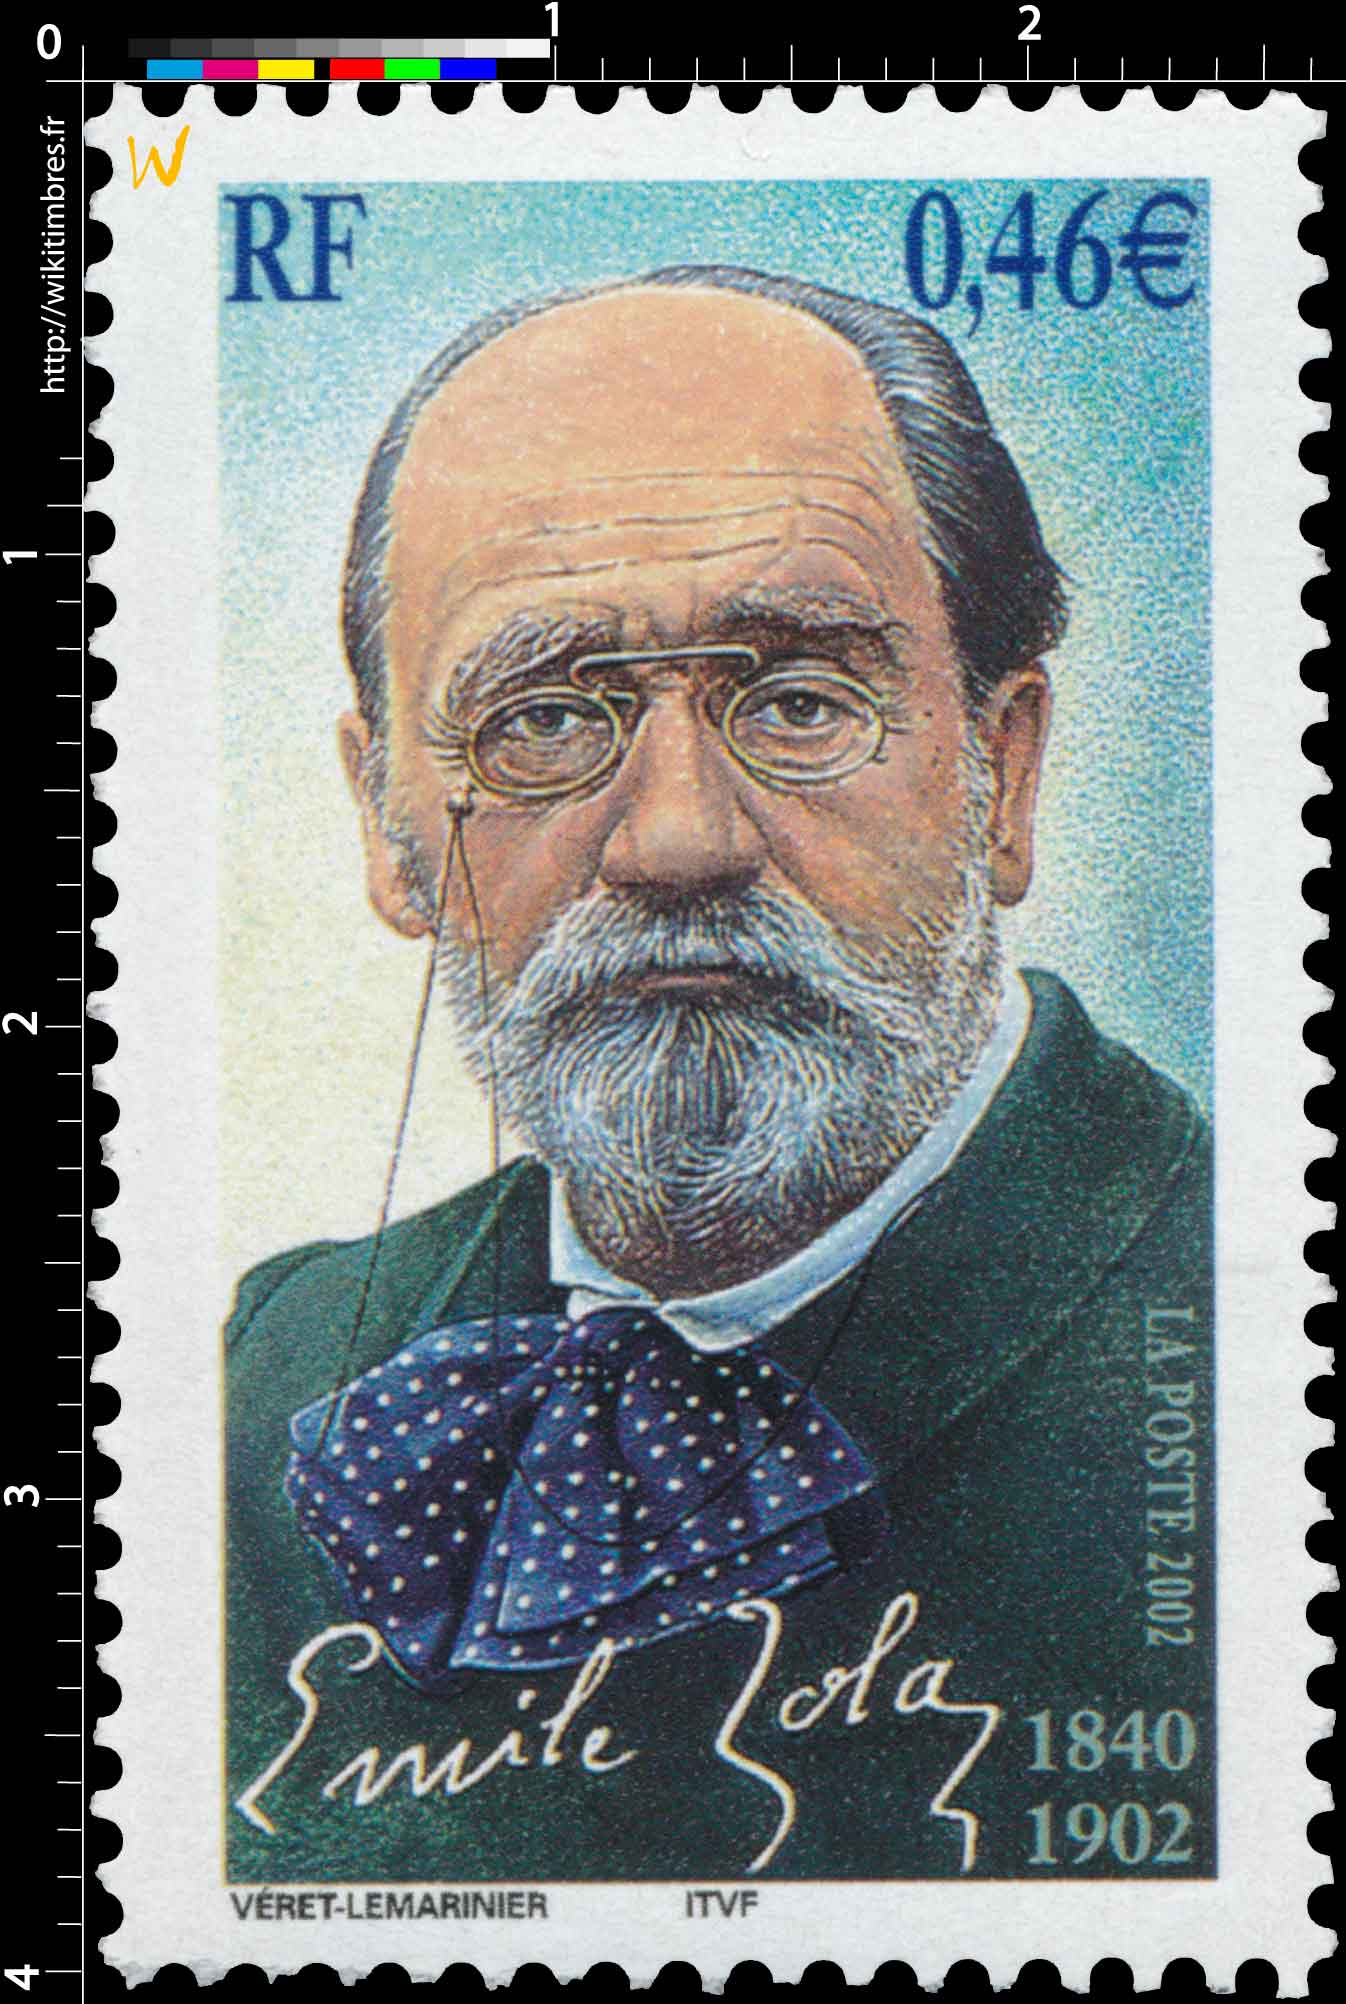 2002 Émile Zola 1840-1902